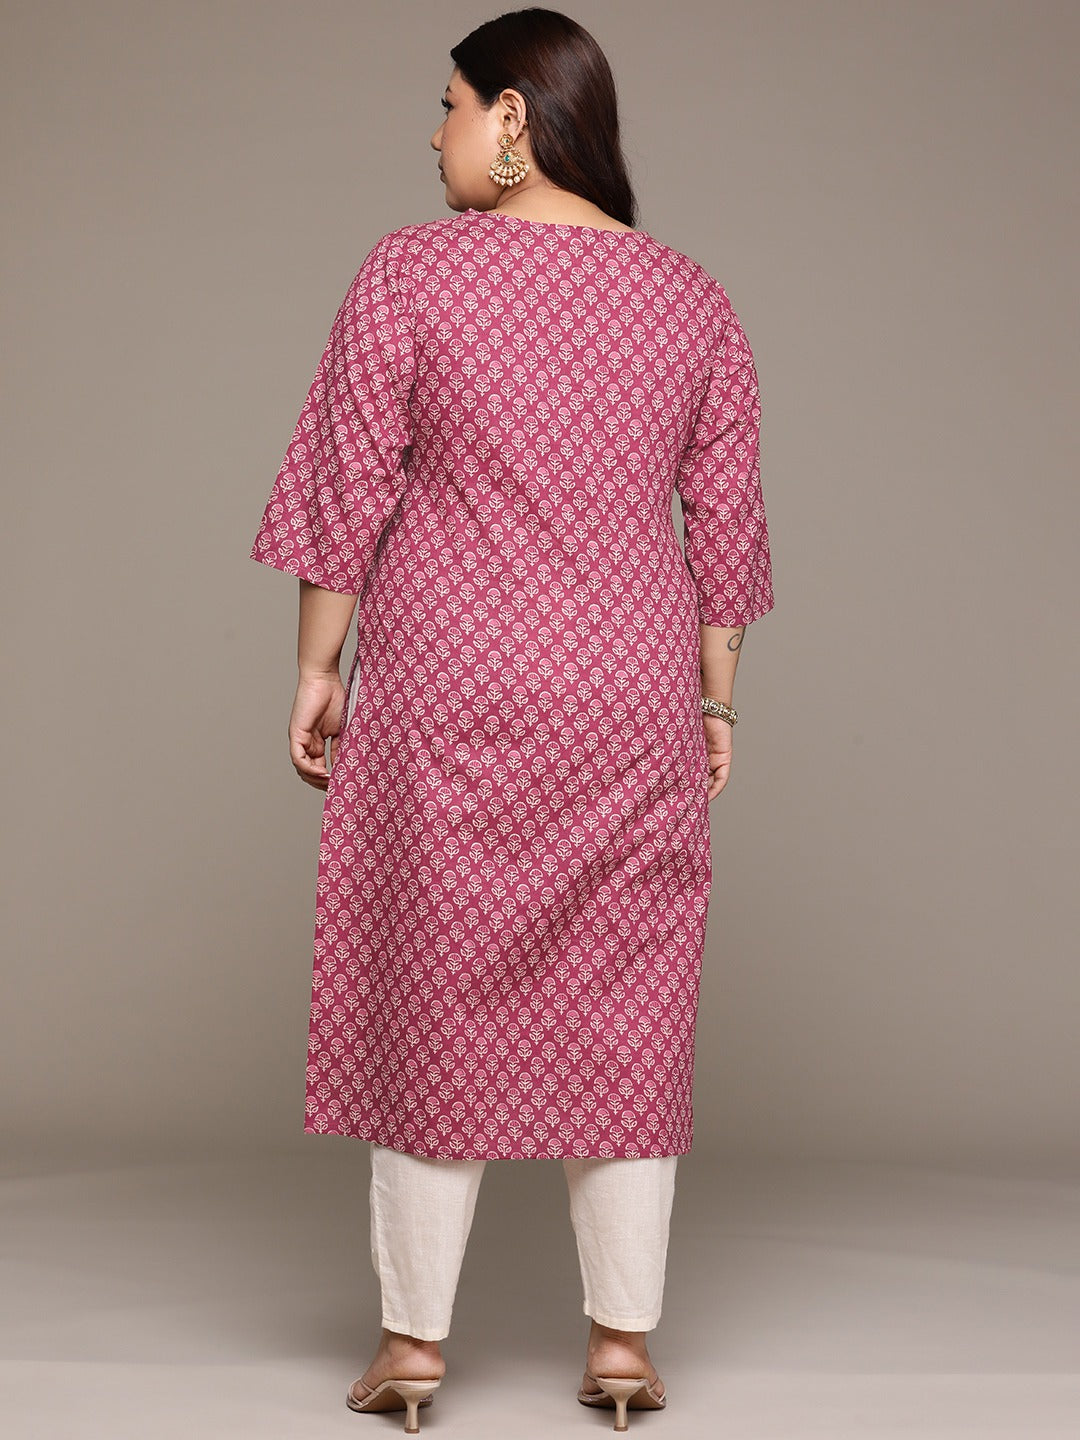 Plus Size Straight style Cotton fabric Burgundy color kurta